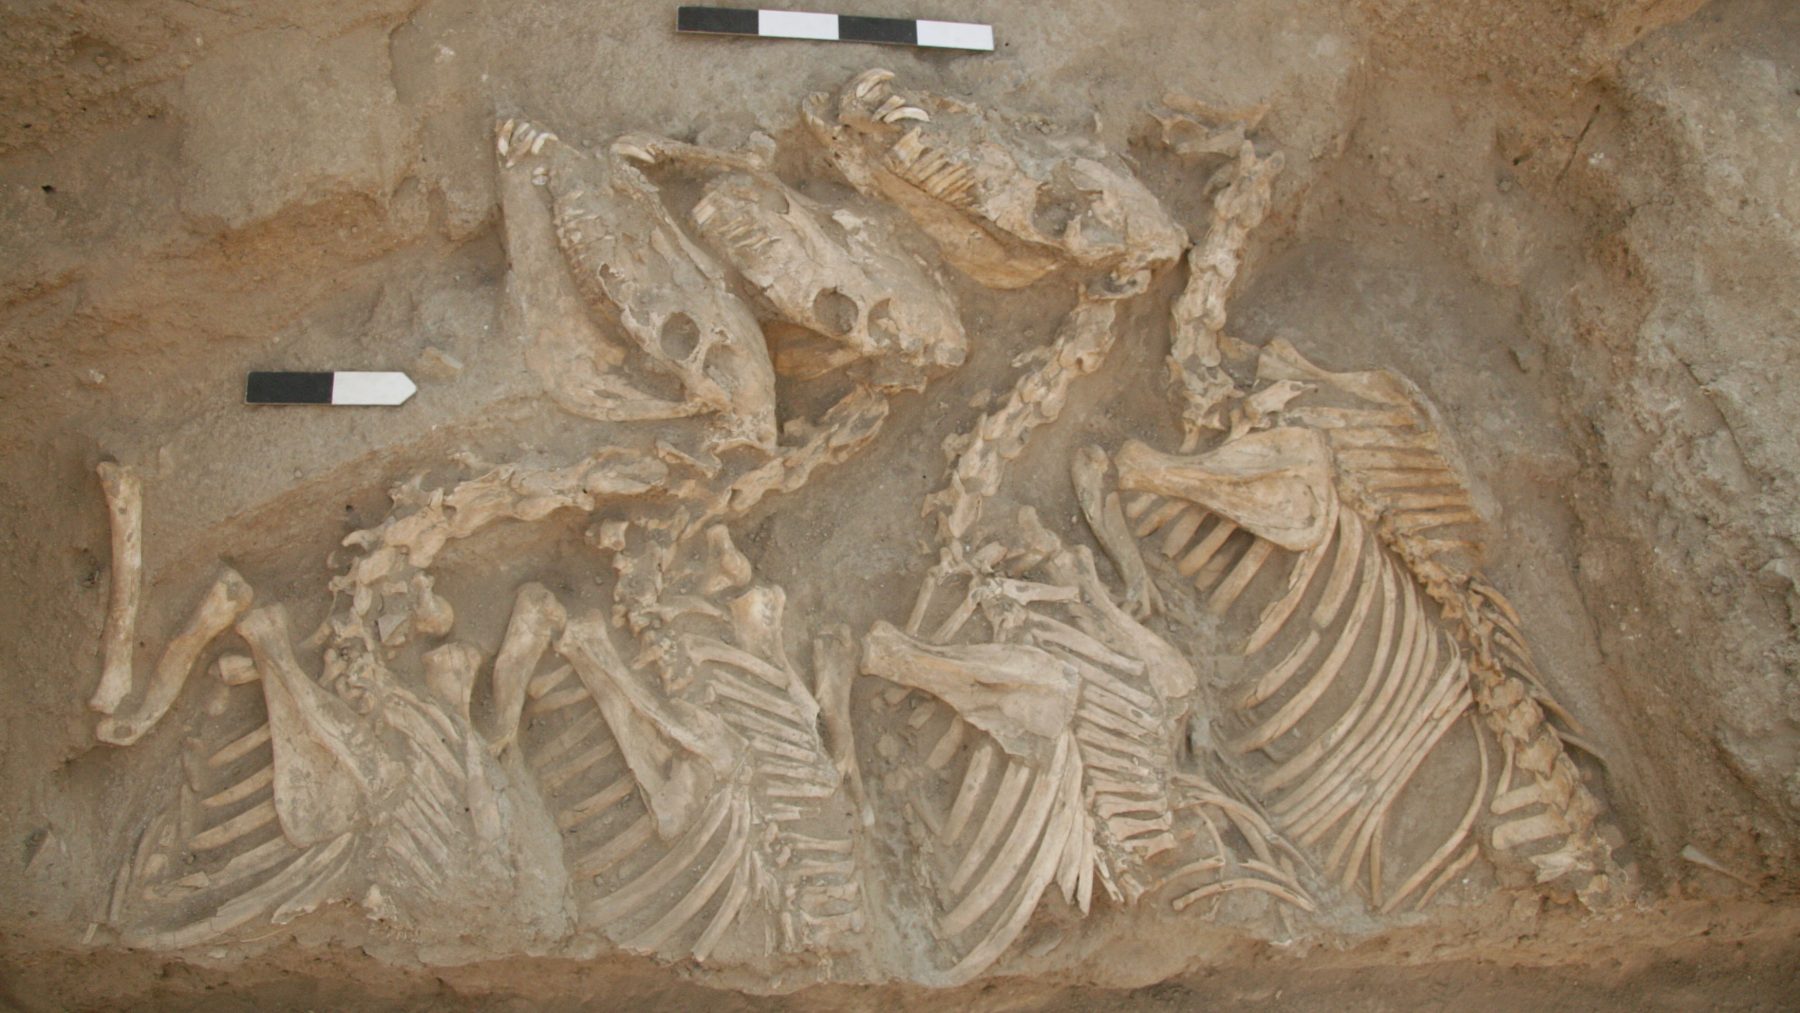 Kunga remains at the Umm el-Marra site. Credit: Glenn Schwartz/John Hopkins University